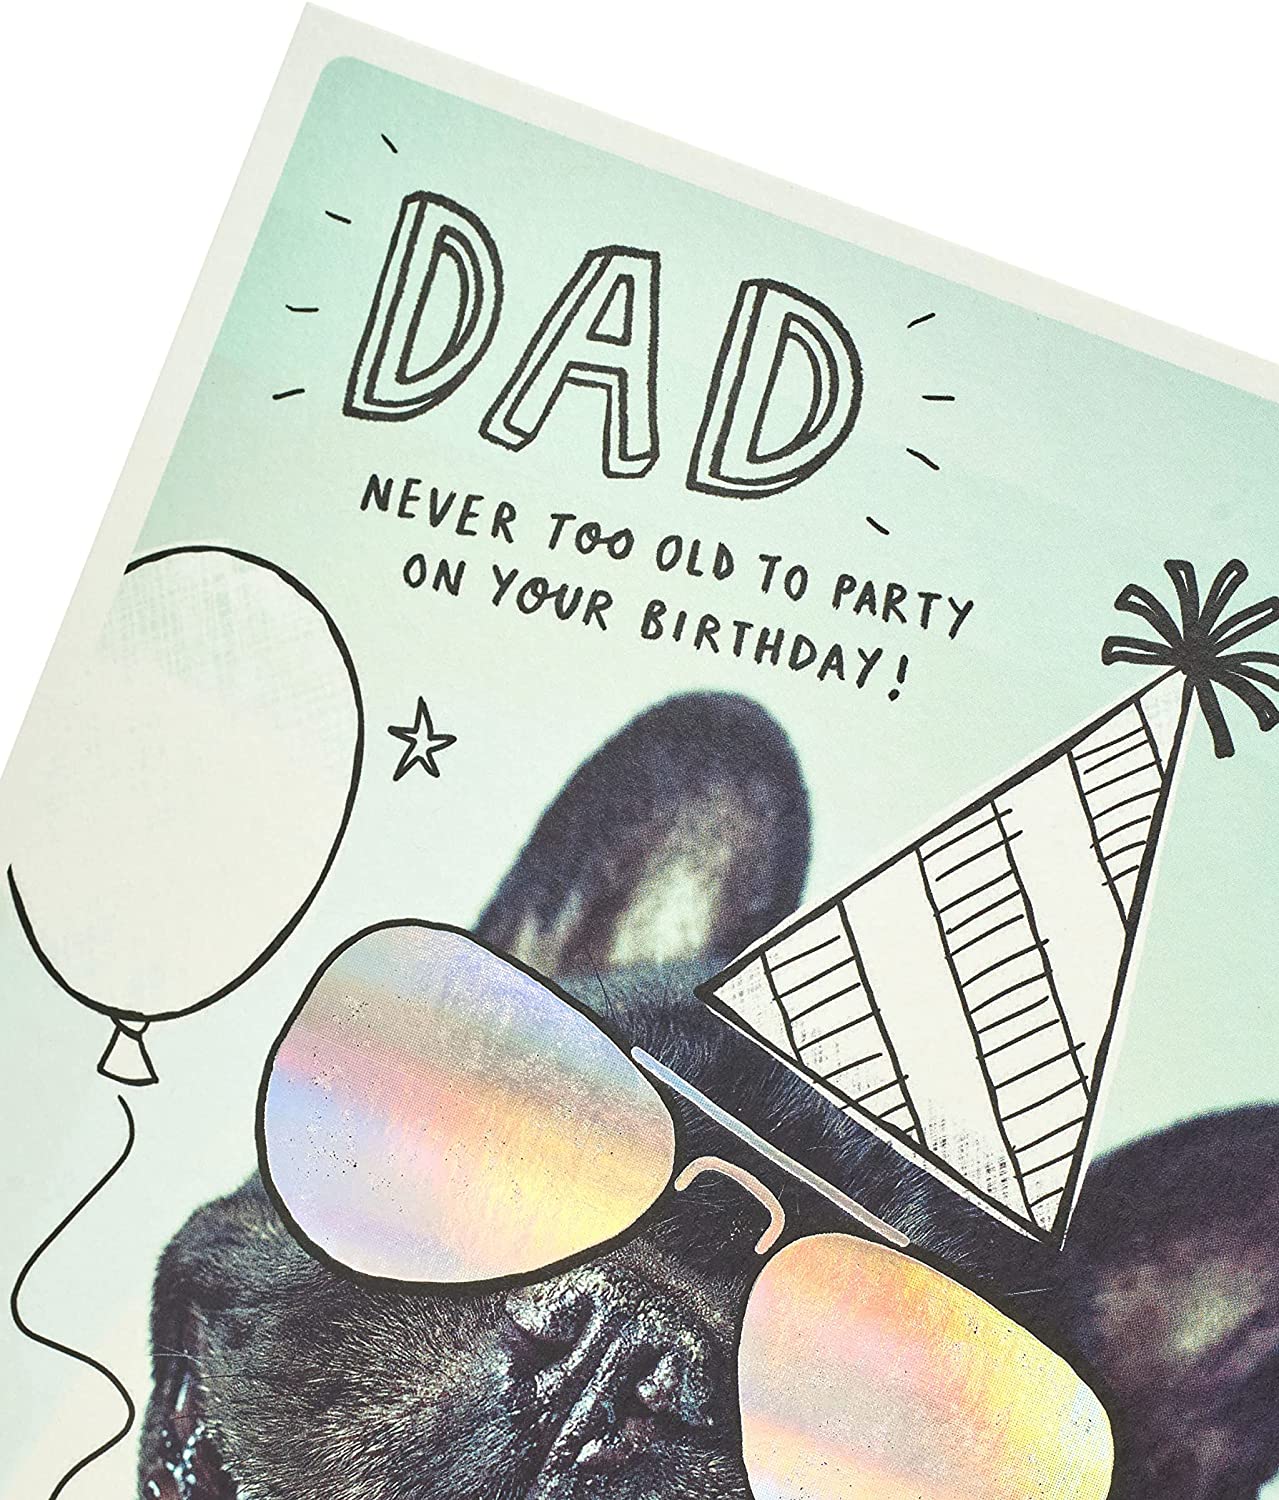 Dad Birthday Card Contemporary Funny Pug 